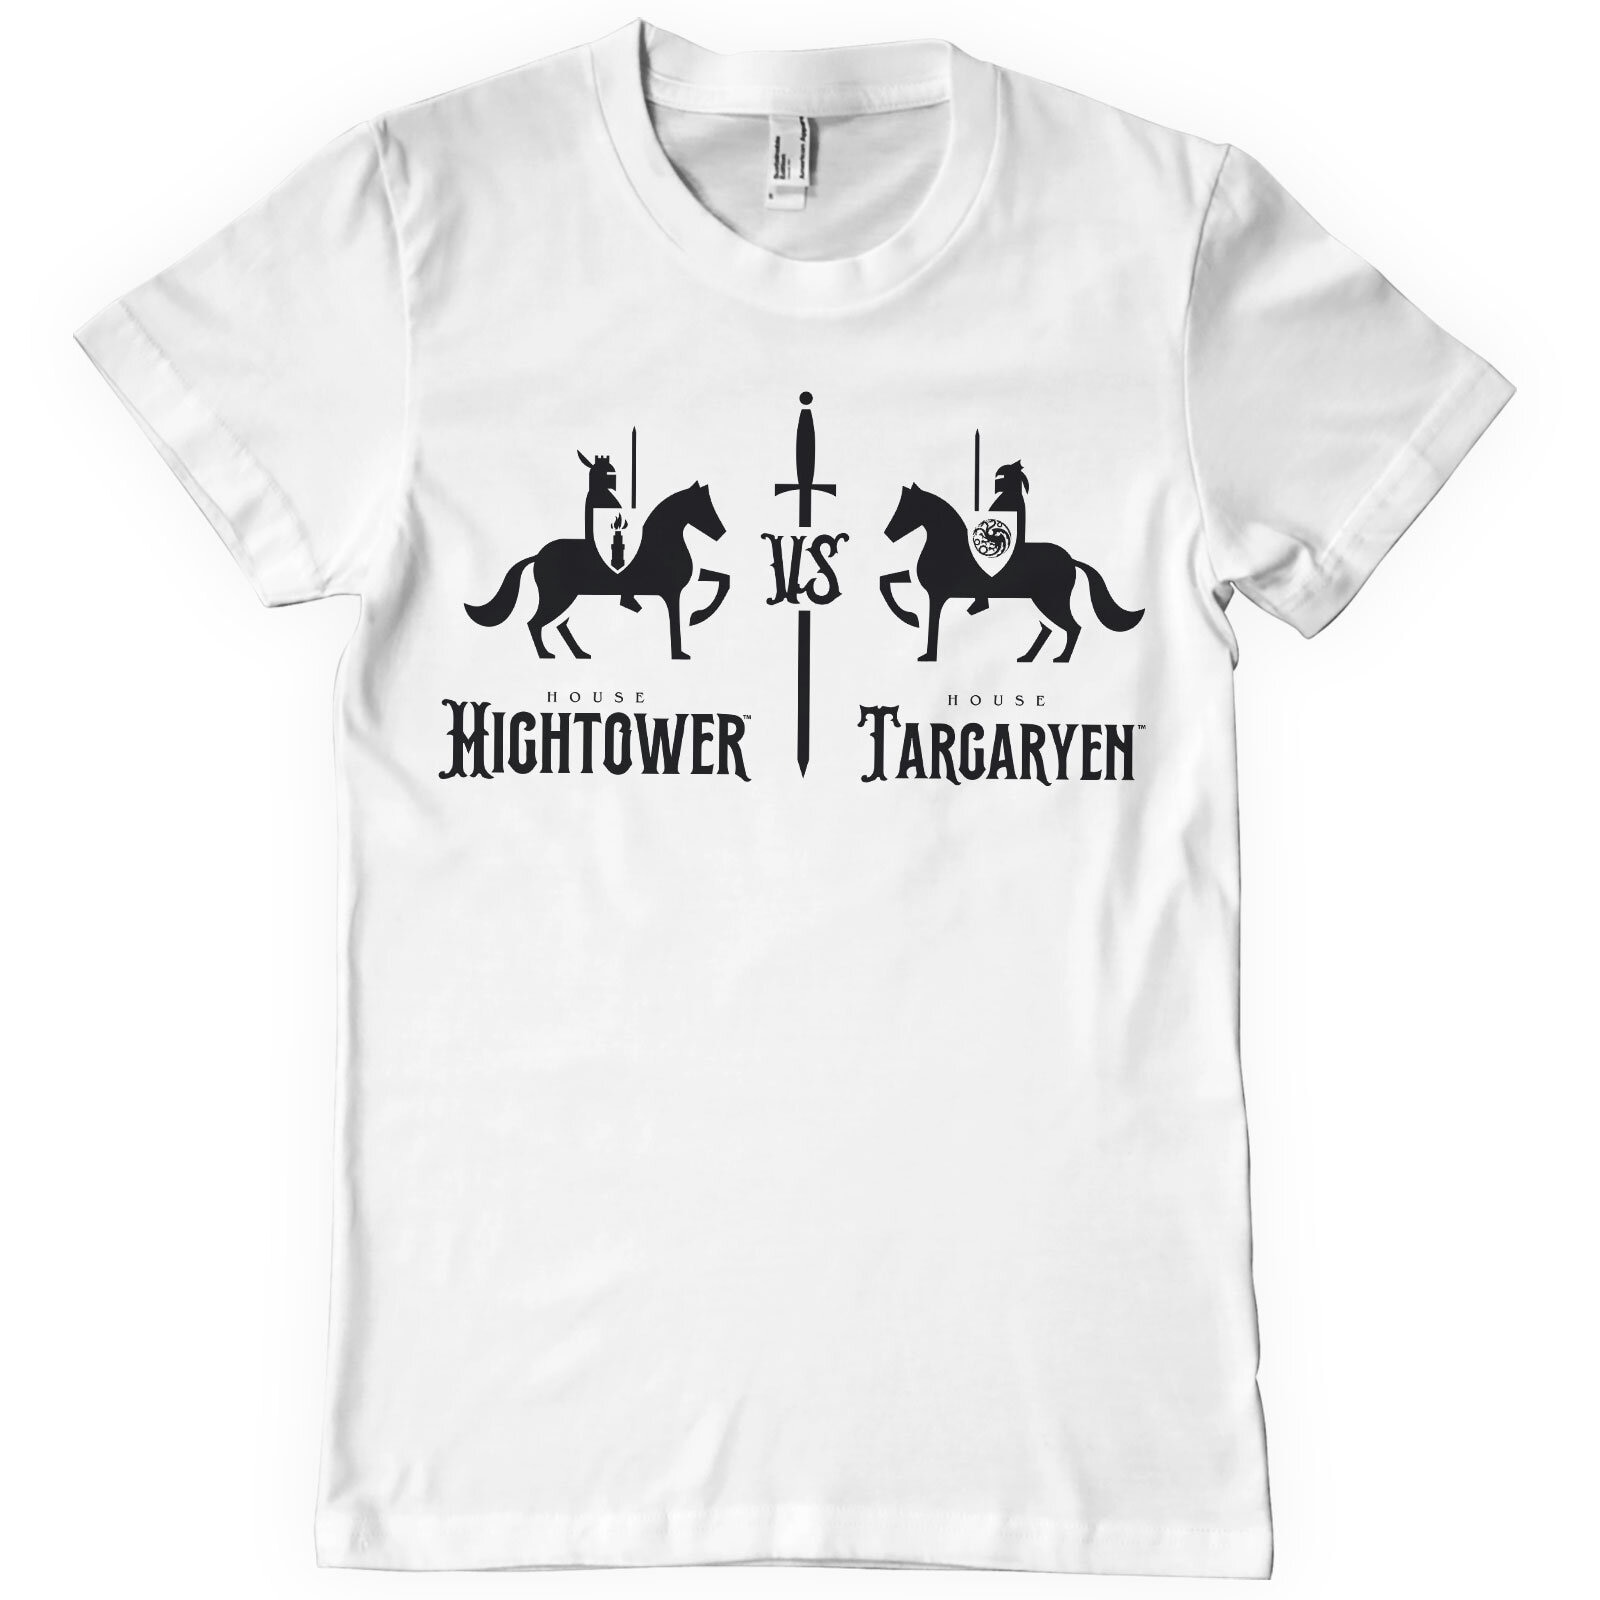 Hightower VS Targaryen T-Shirt